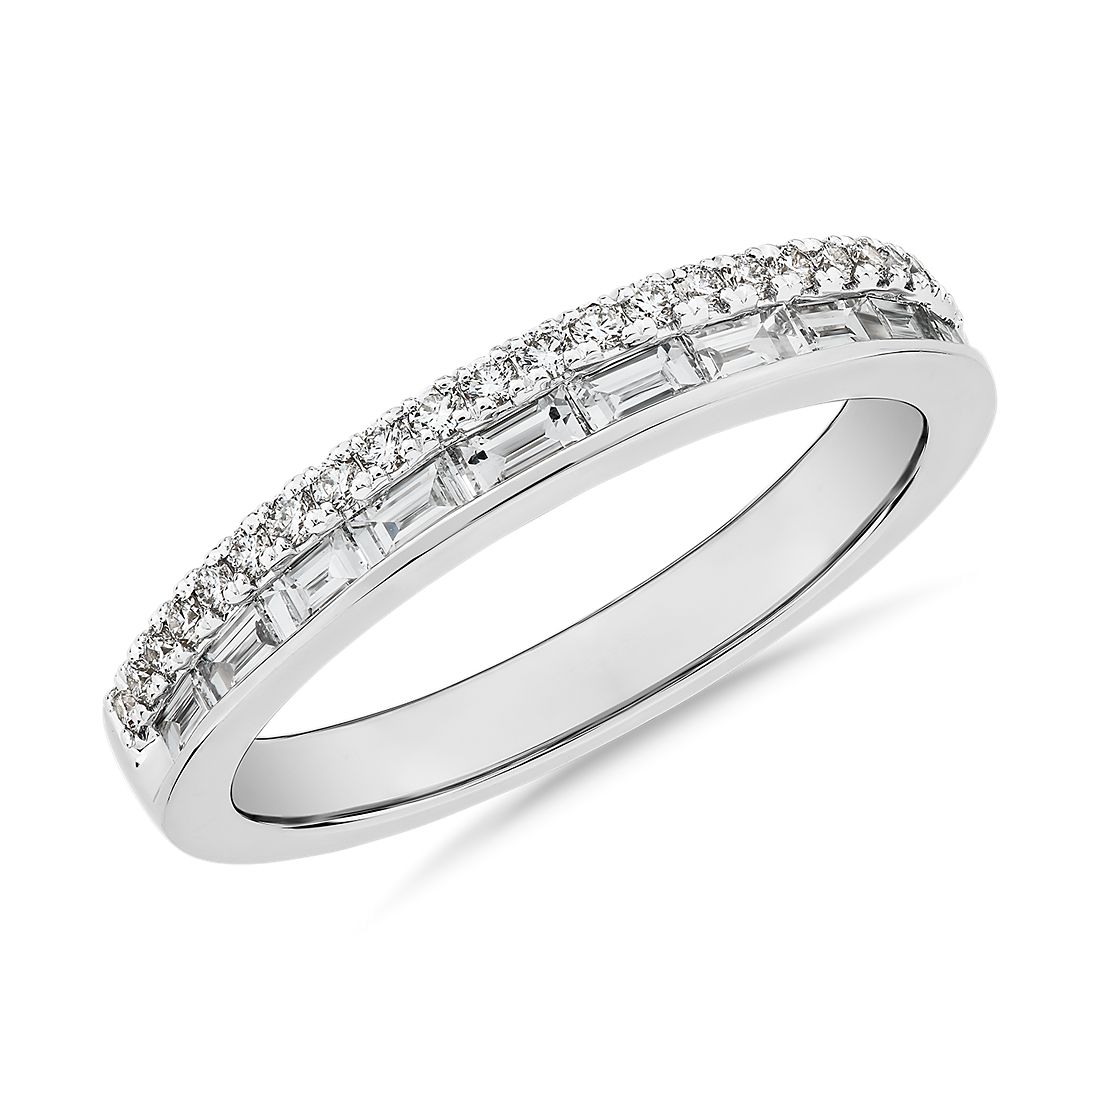 ZAC ZAC POSEN Double Row Baguette & Pavé Diamond Wedding Ring in 14k White Gold (3 mm, 3/8 ct. tw.)